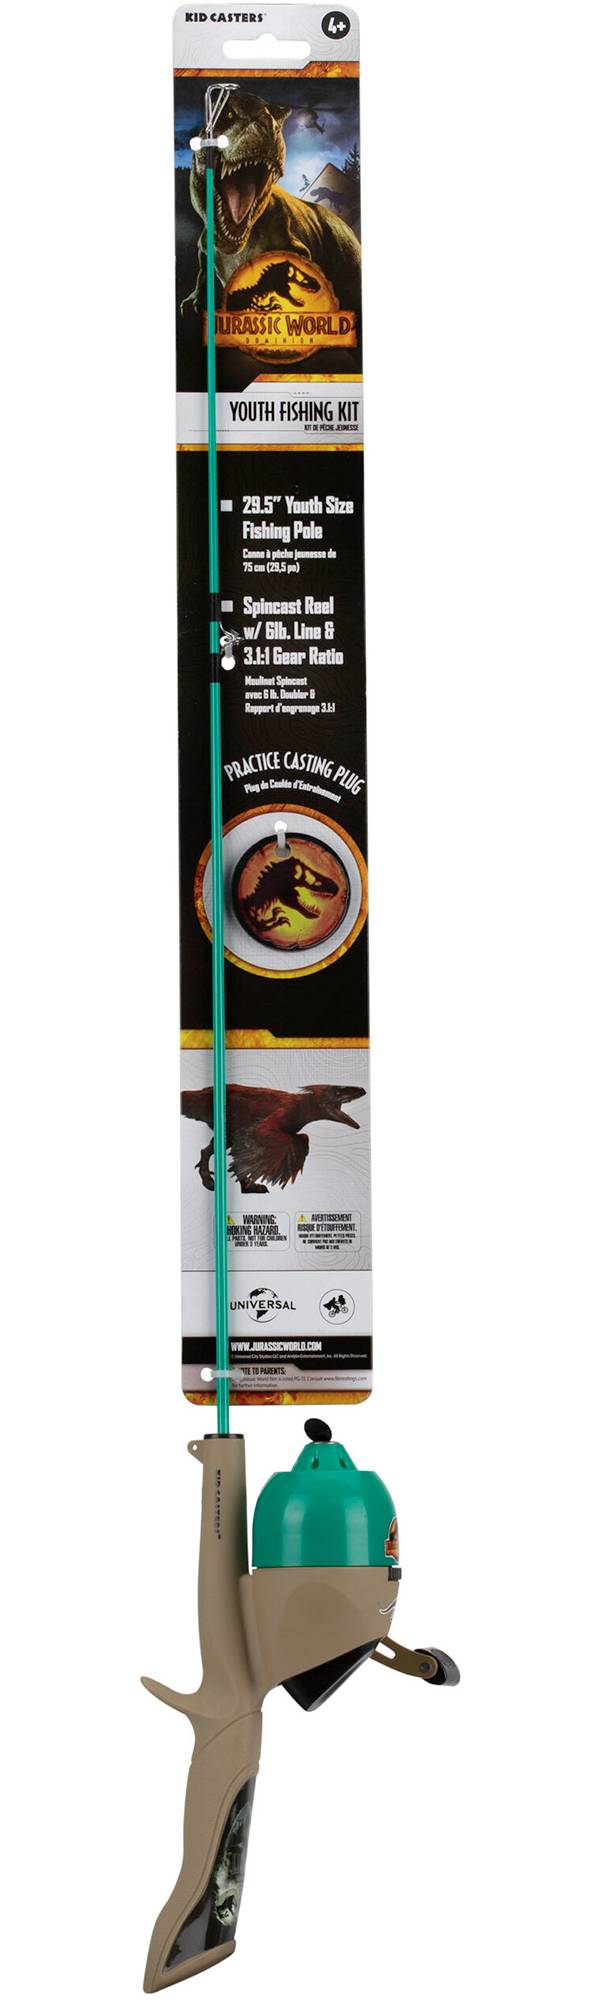 Kid Casters Jurassic World Youth Fishing Kit product image